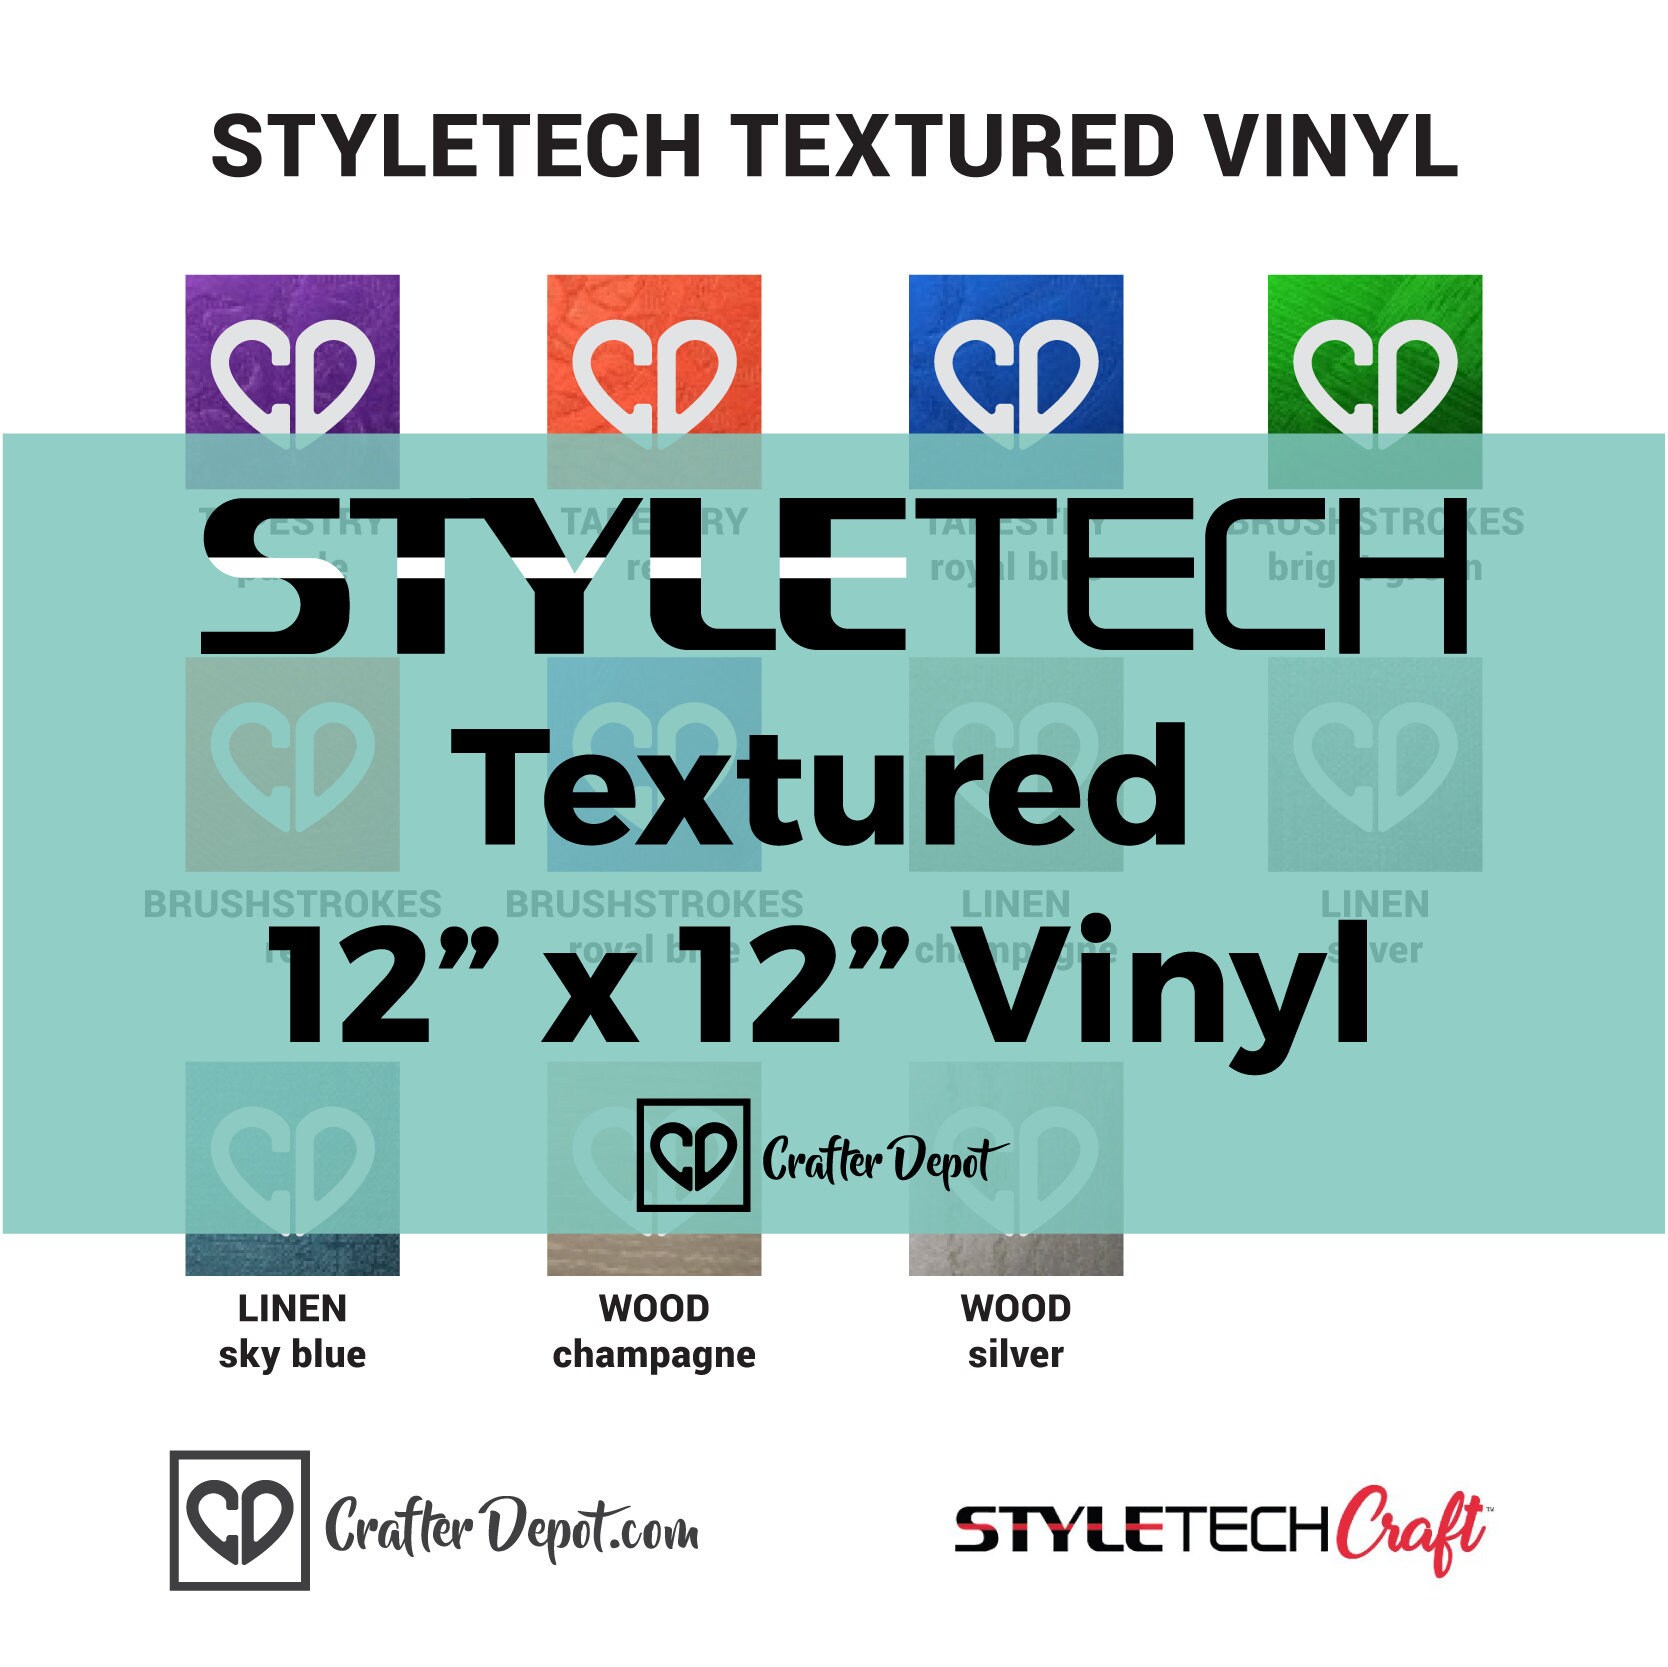 Styletech Polished Metal Vinyl Sheets 12 X 12, Metallic Vinyl